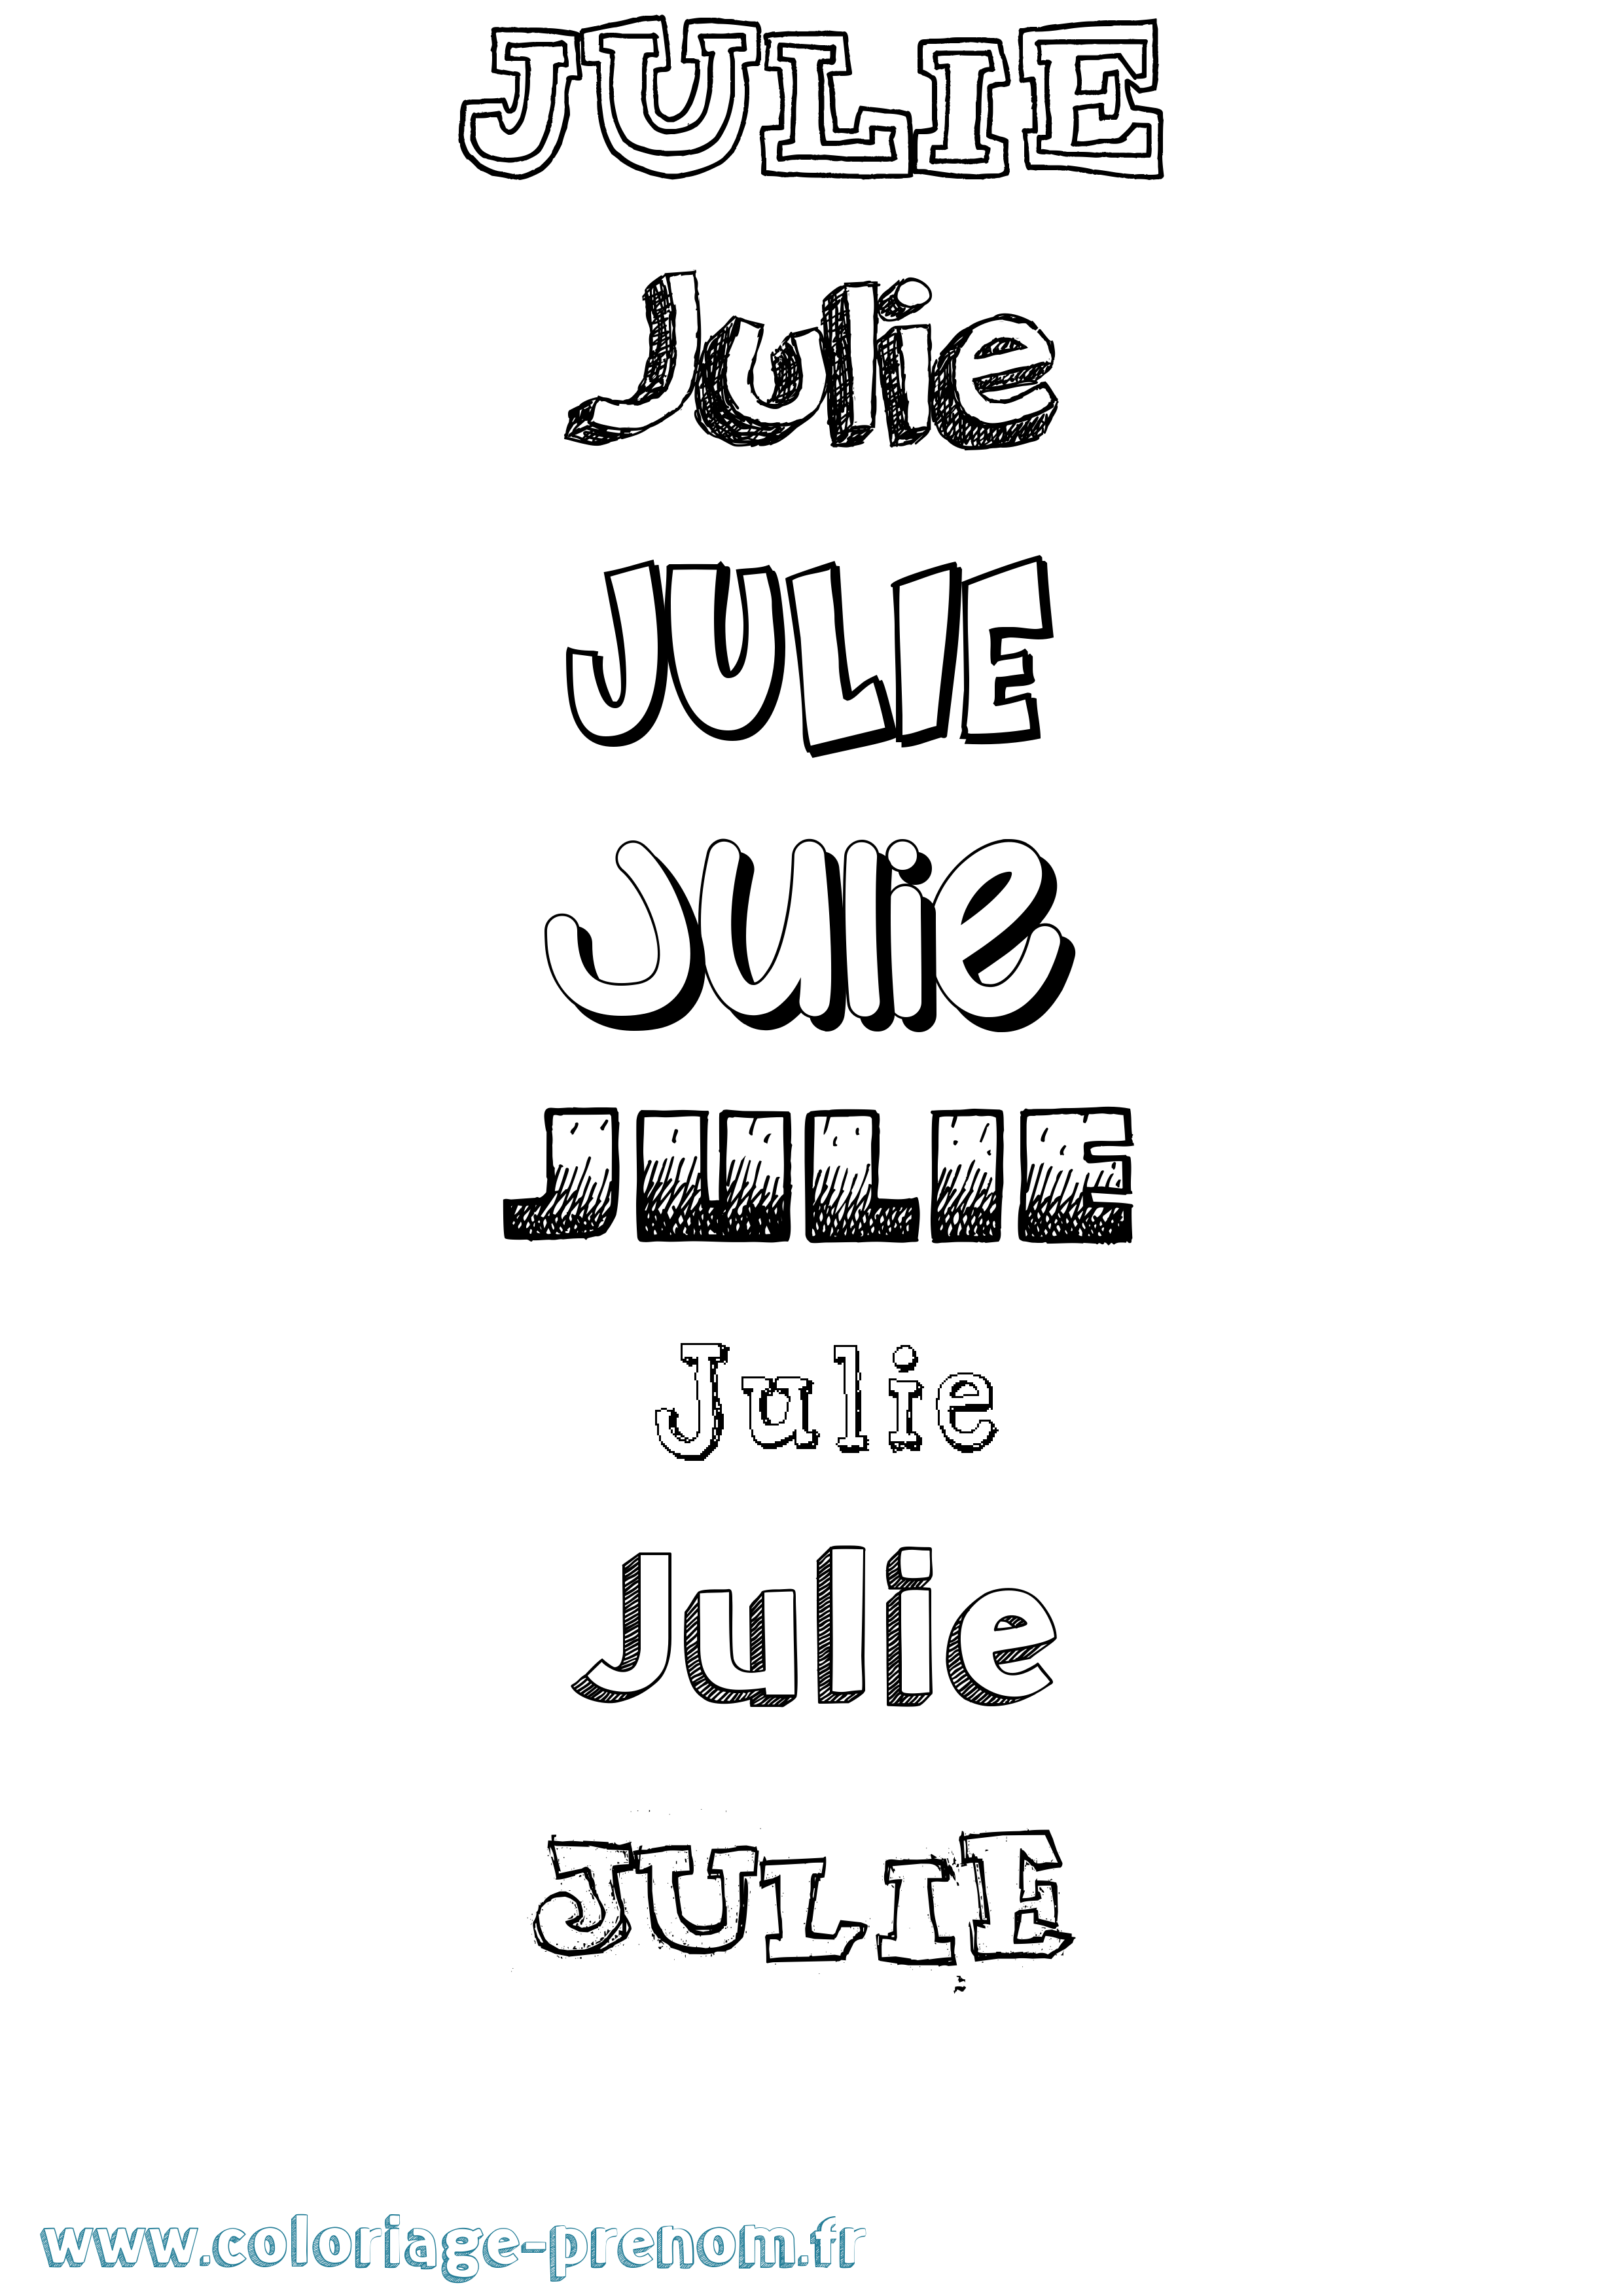 Coloriage prénom Julie